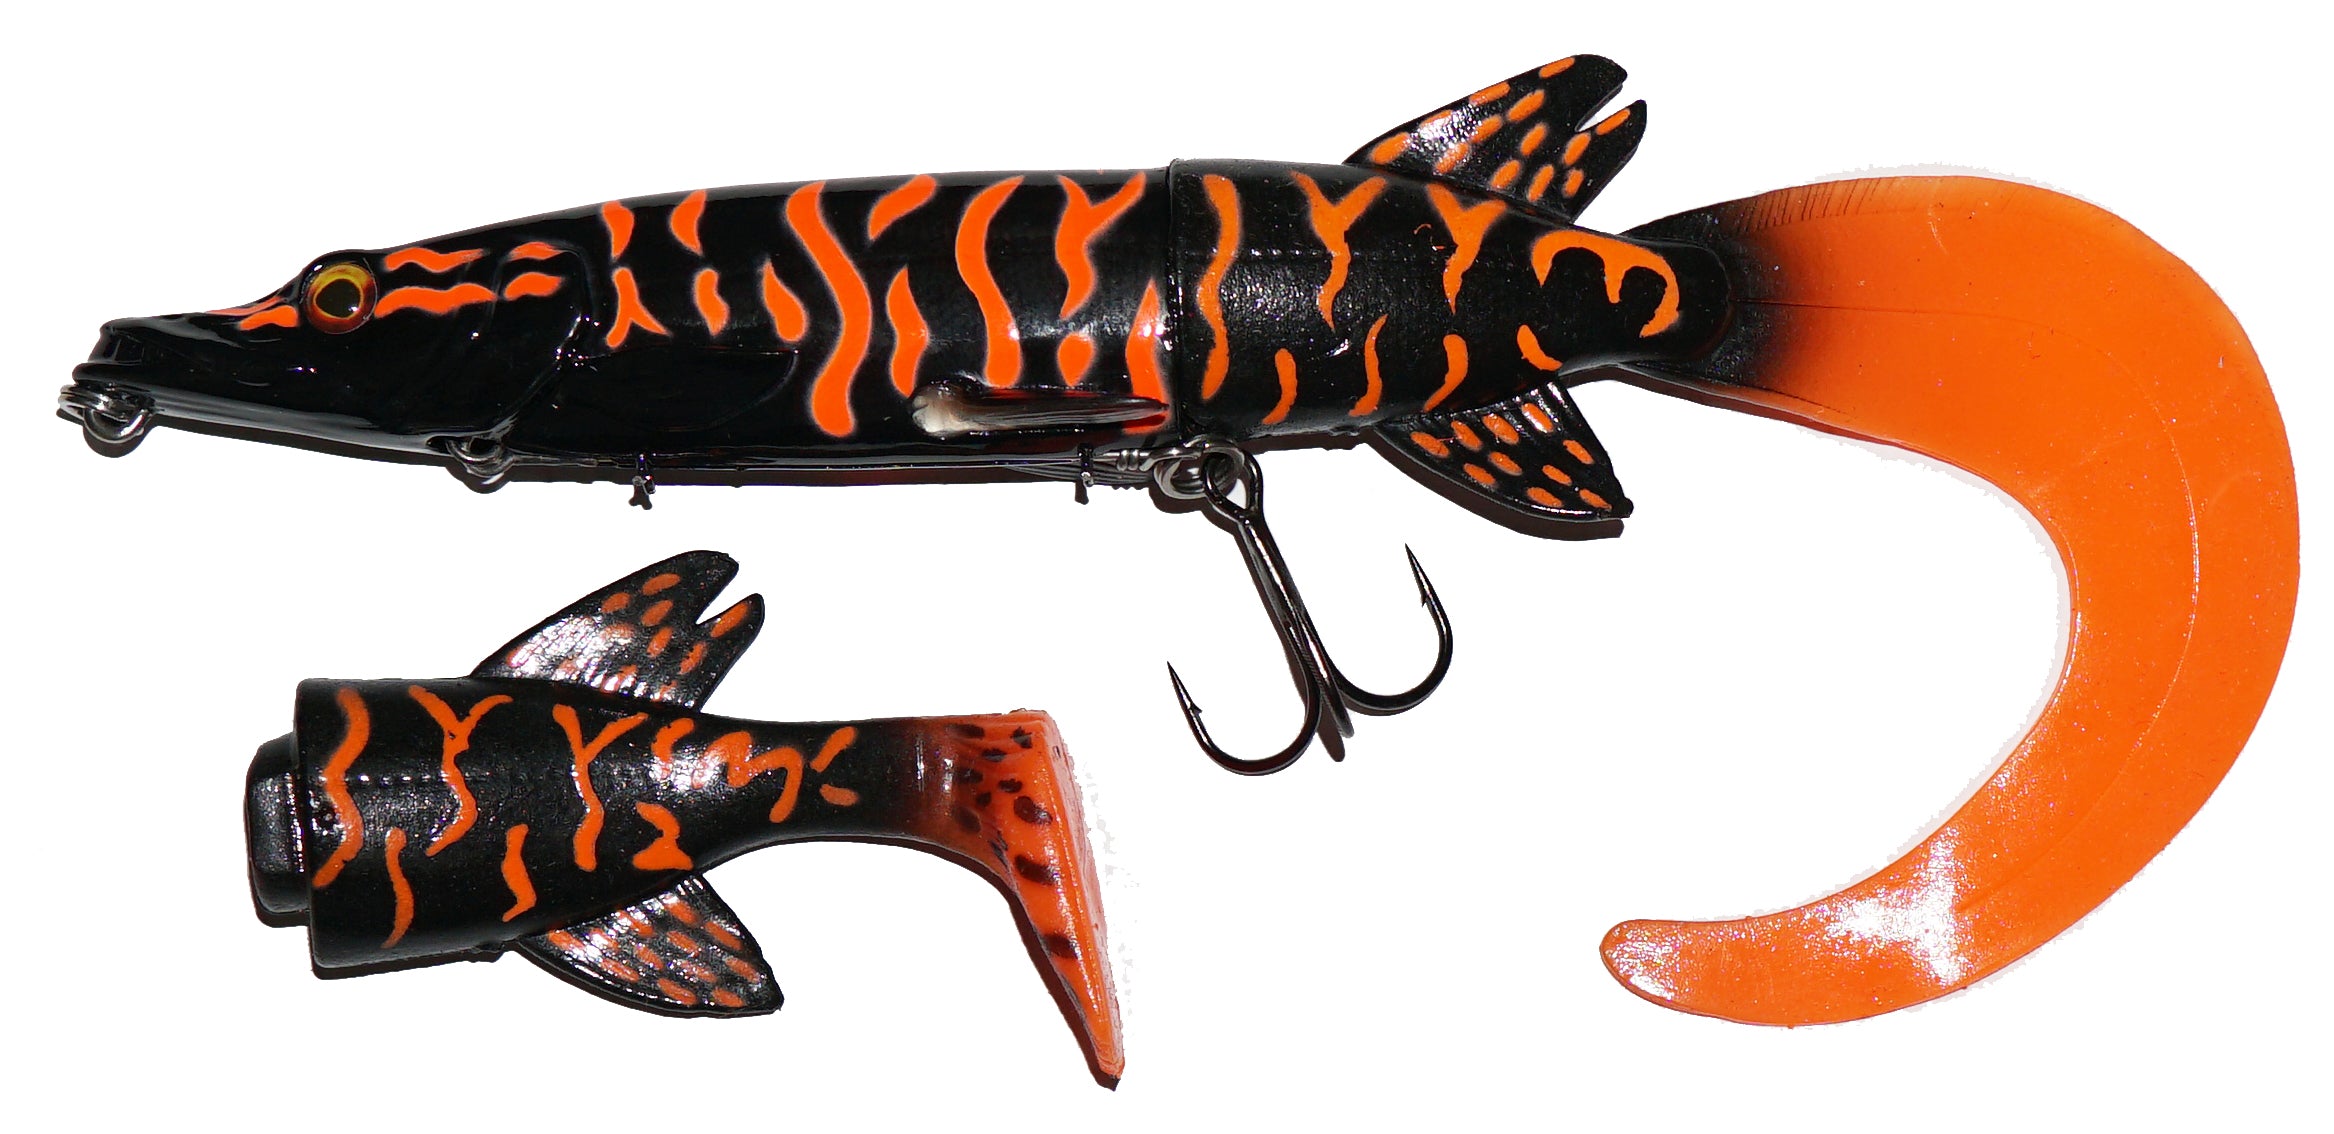 Cheap SavageGear Predator Fishing Gear, Clearance Sale